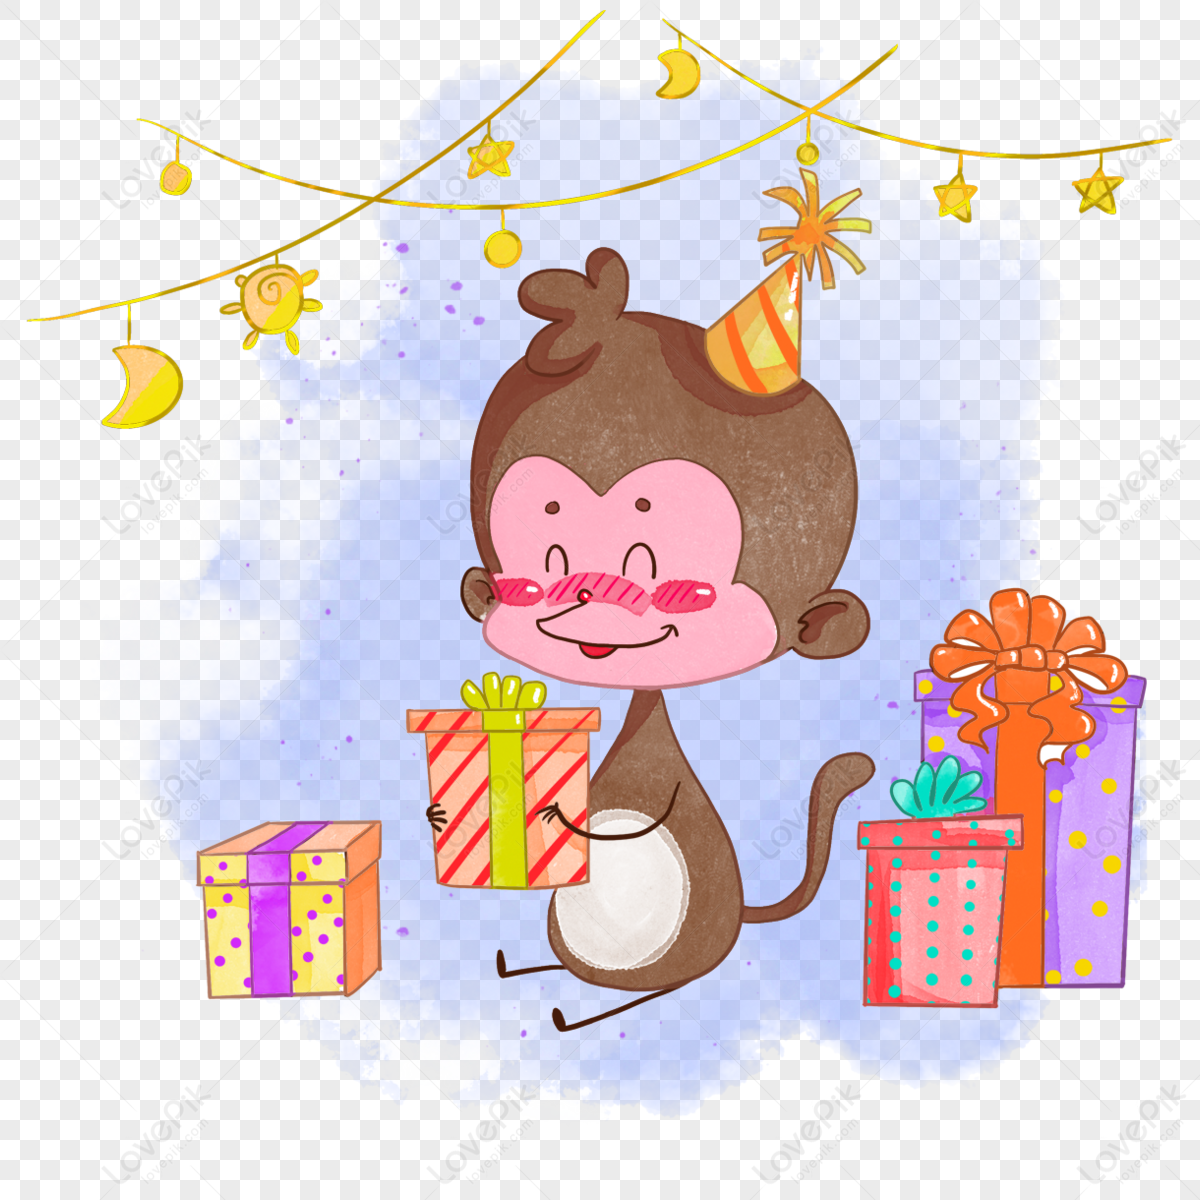 Watercolor cartoon animal monkey passing day,gift box,lantern png image free download